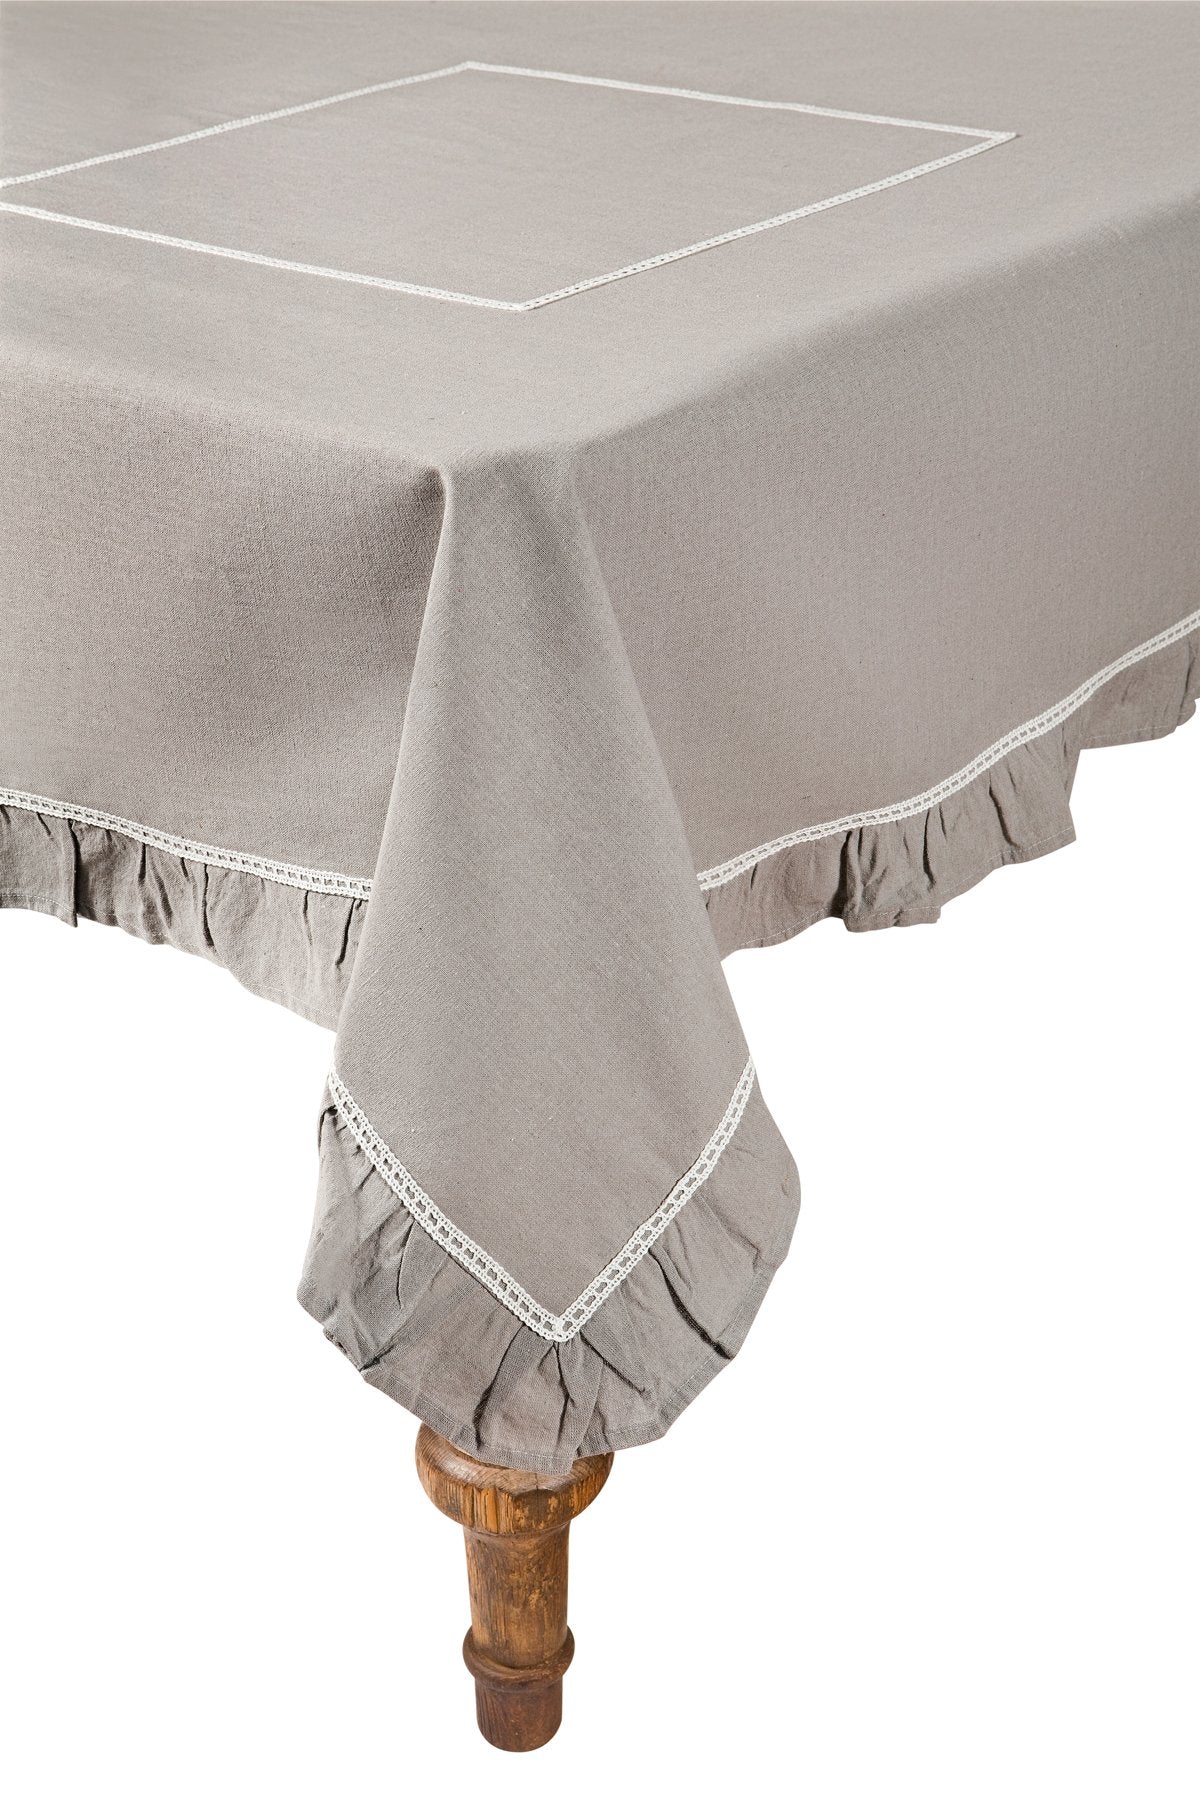 Ruffle Trim W/White Lace Tablecloth